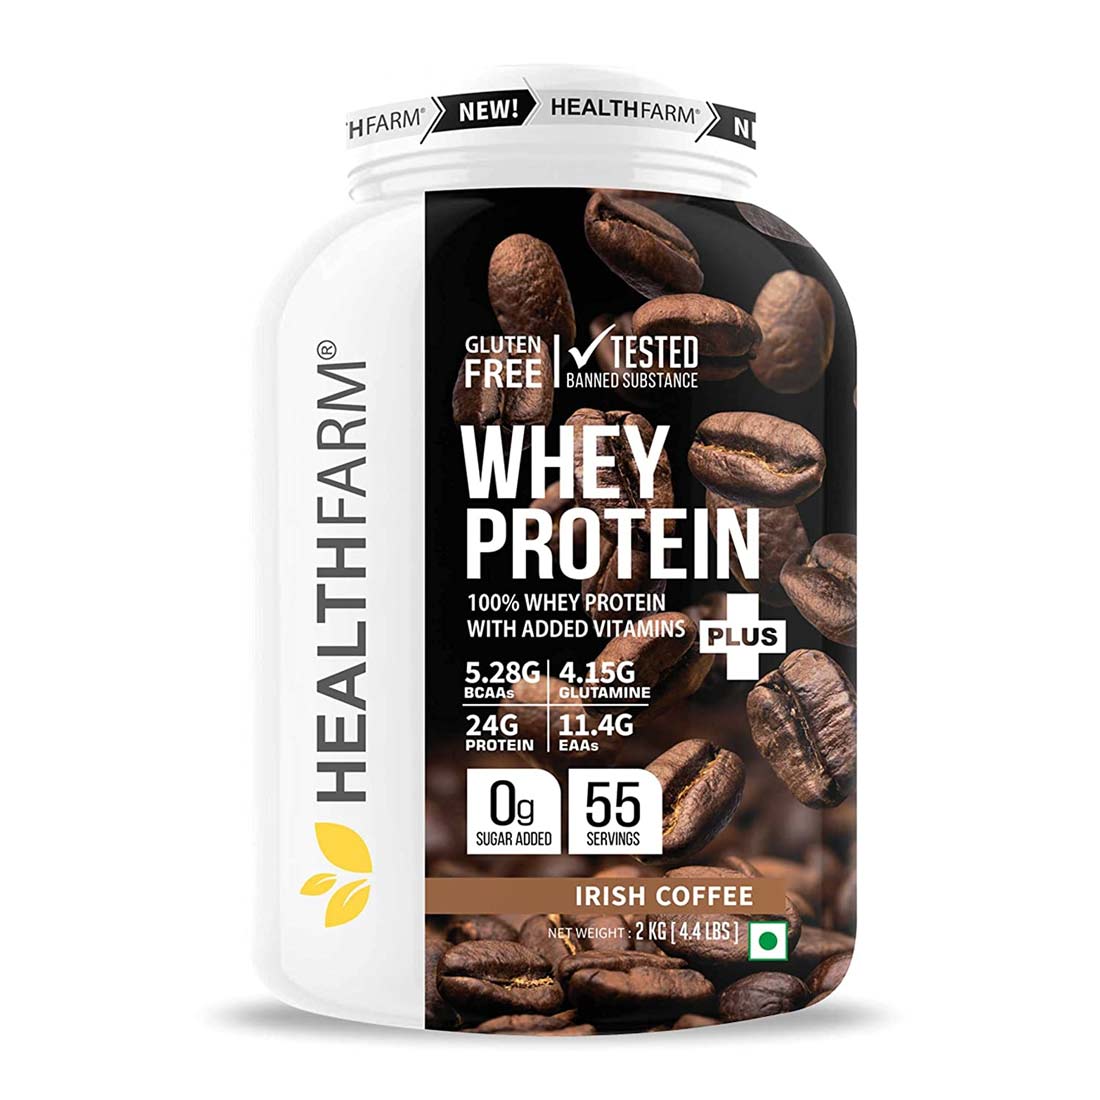 HEALTHFARM Whey Protein Plus With Added Vitamins